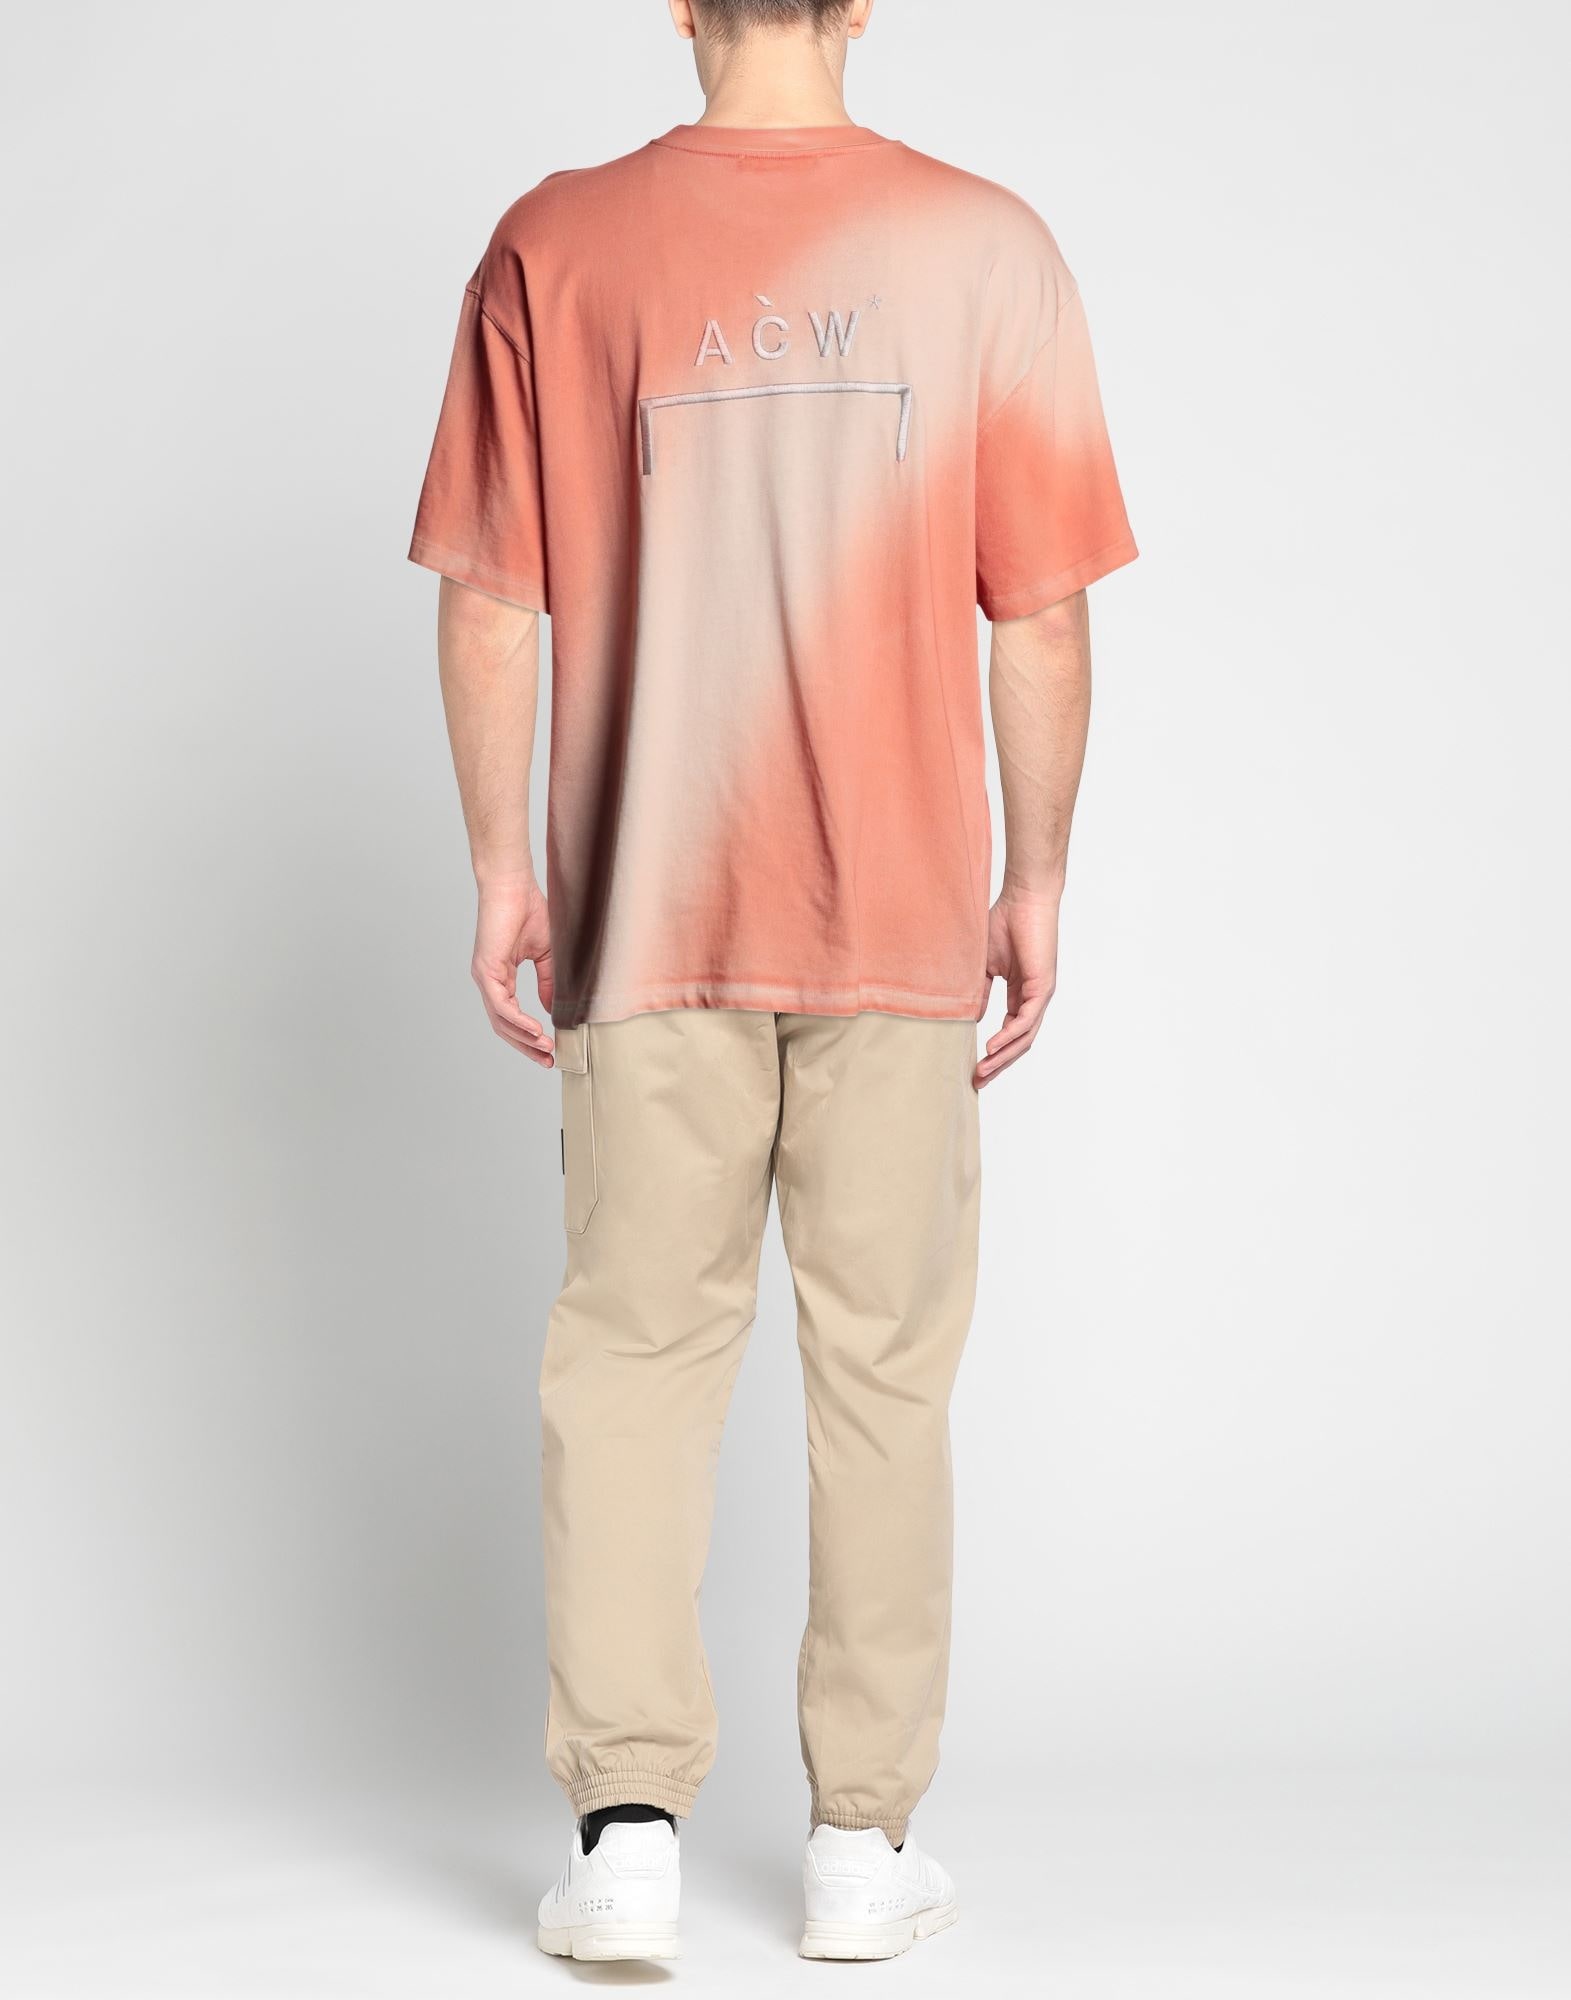 Rust Men's T-shirt - 3